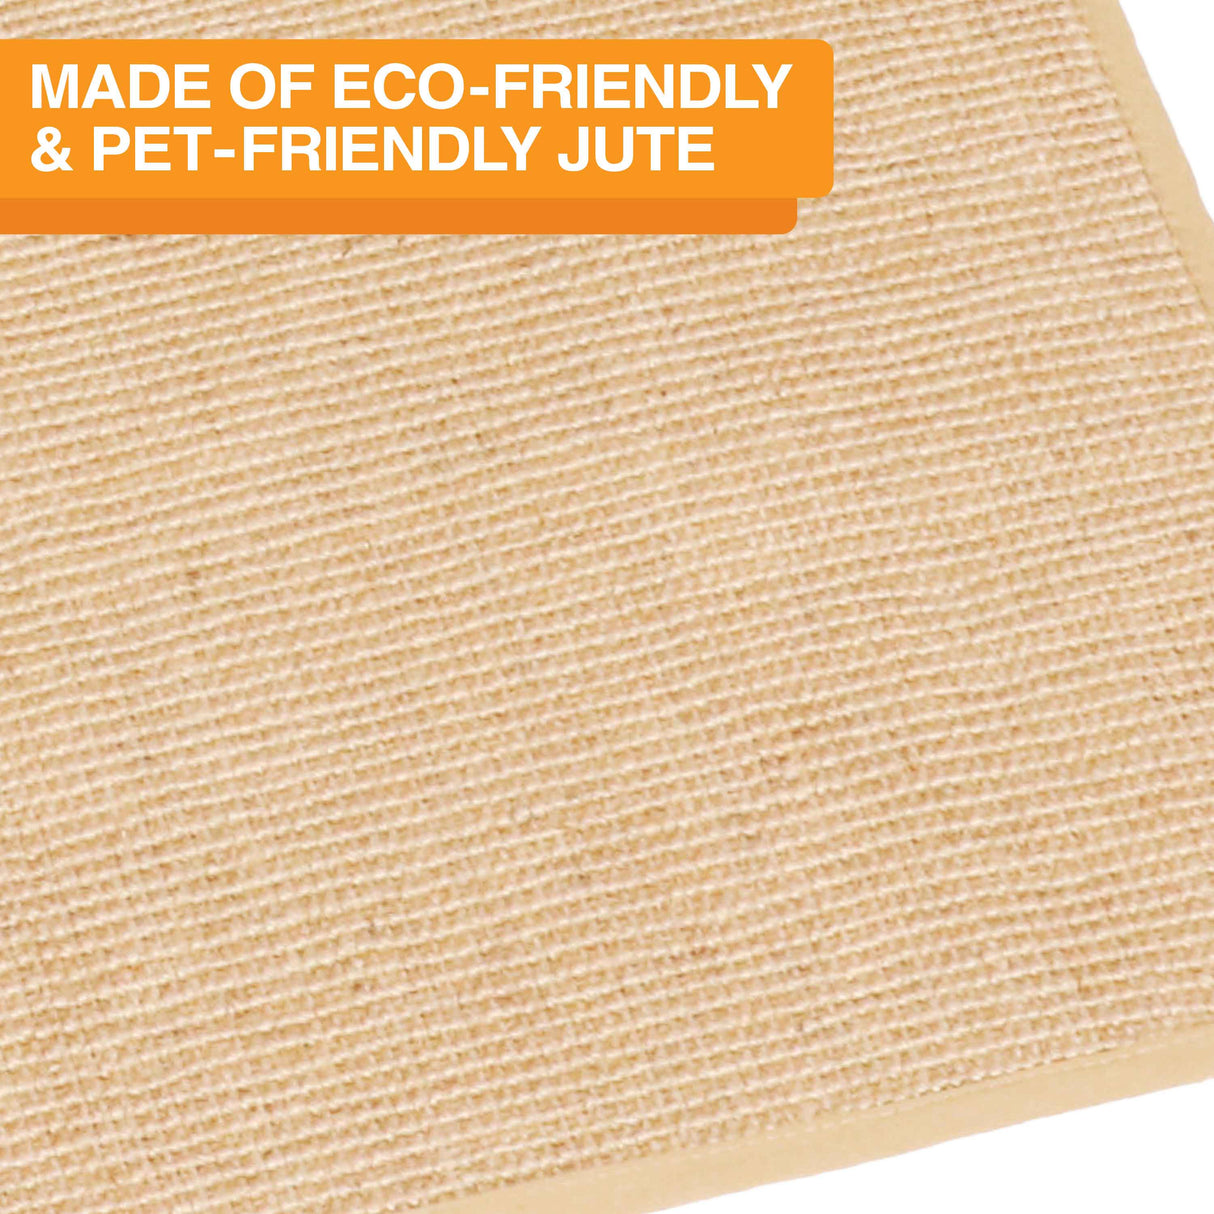 Beige mat made of eco-friendly jute